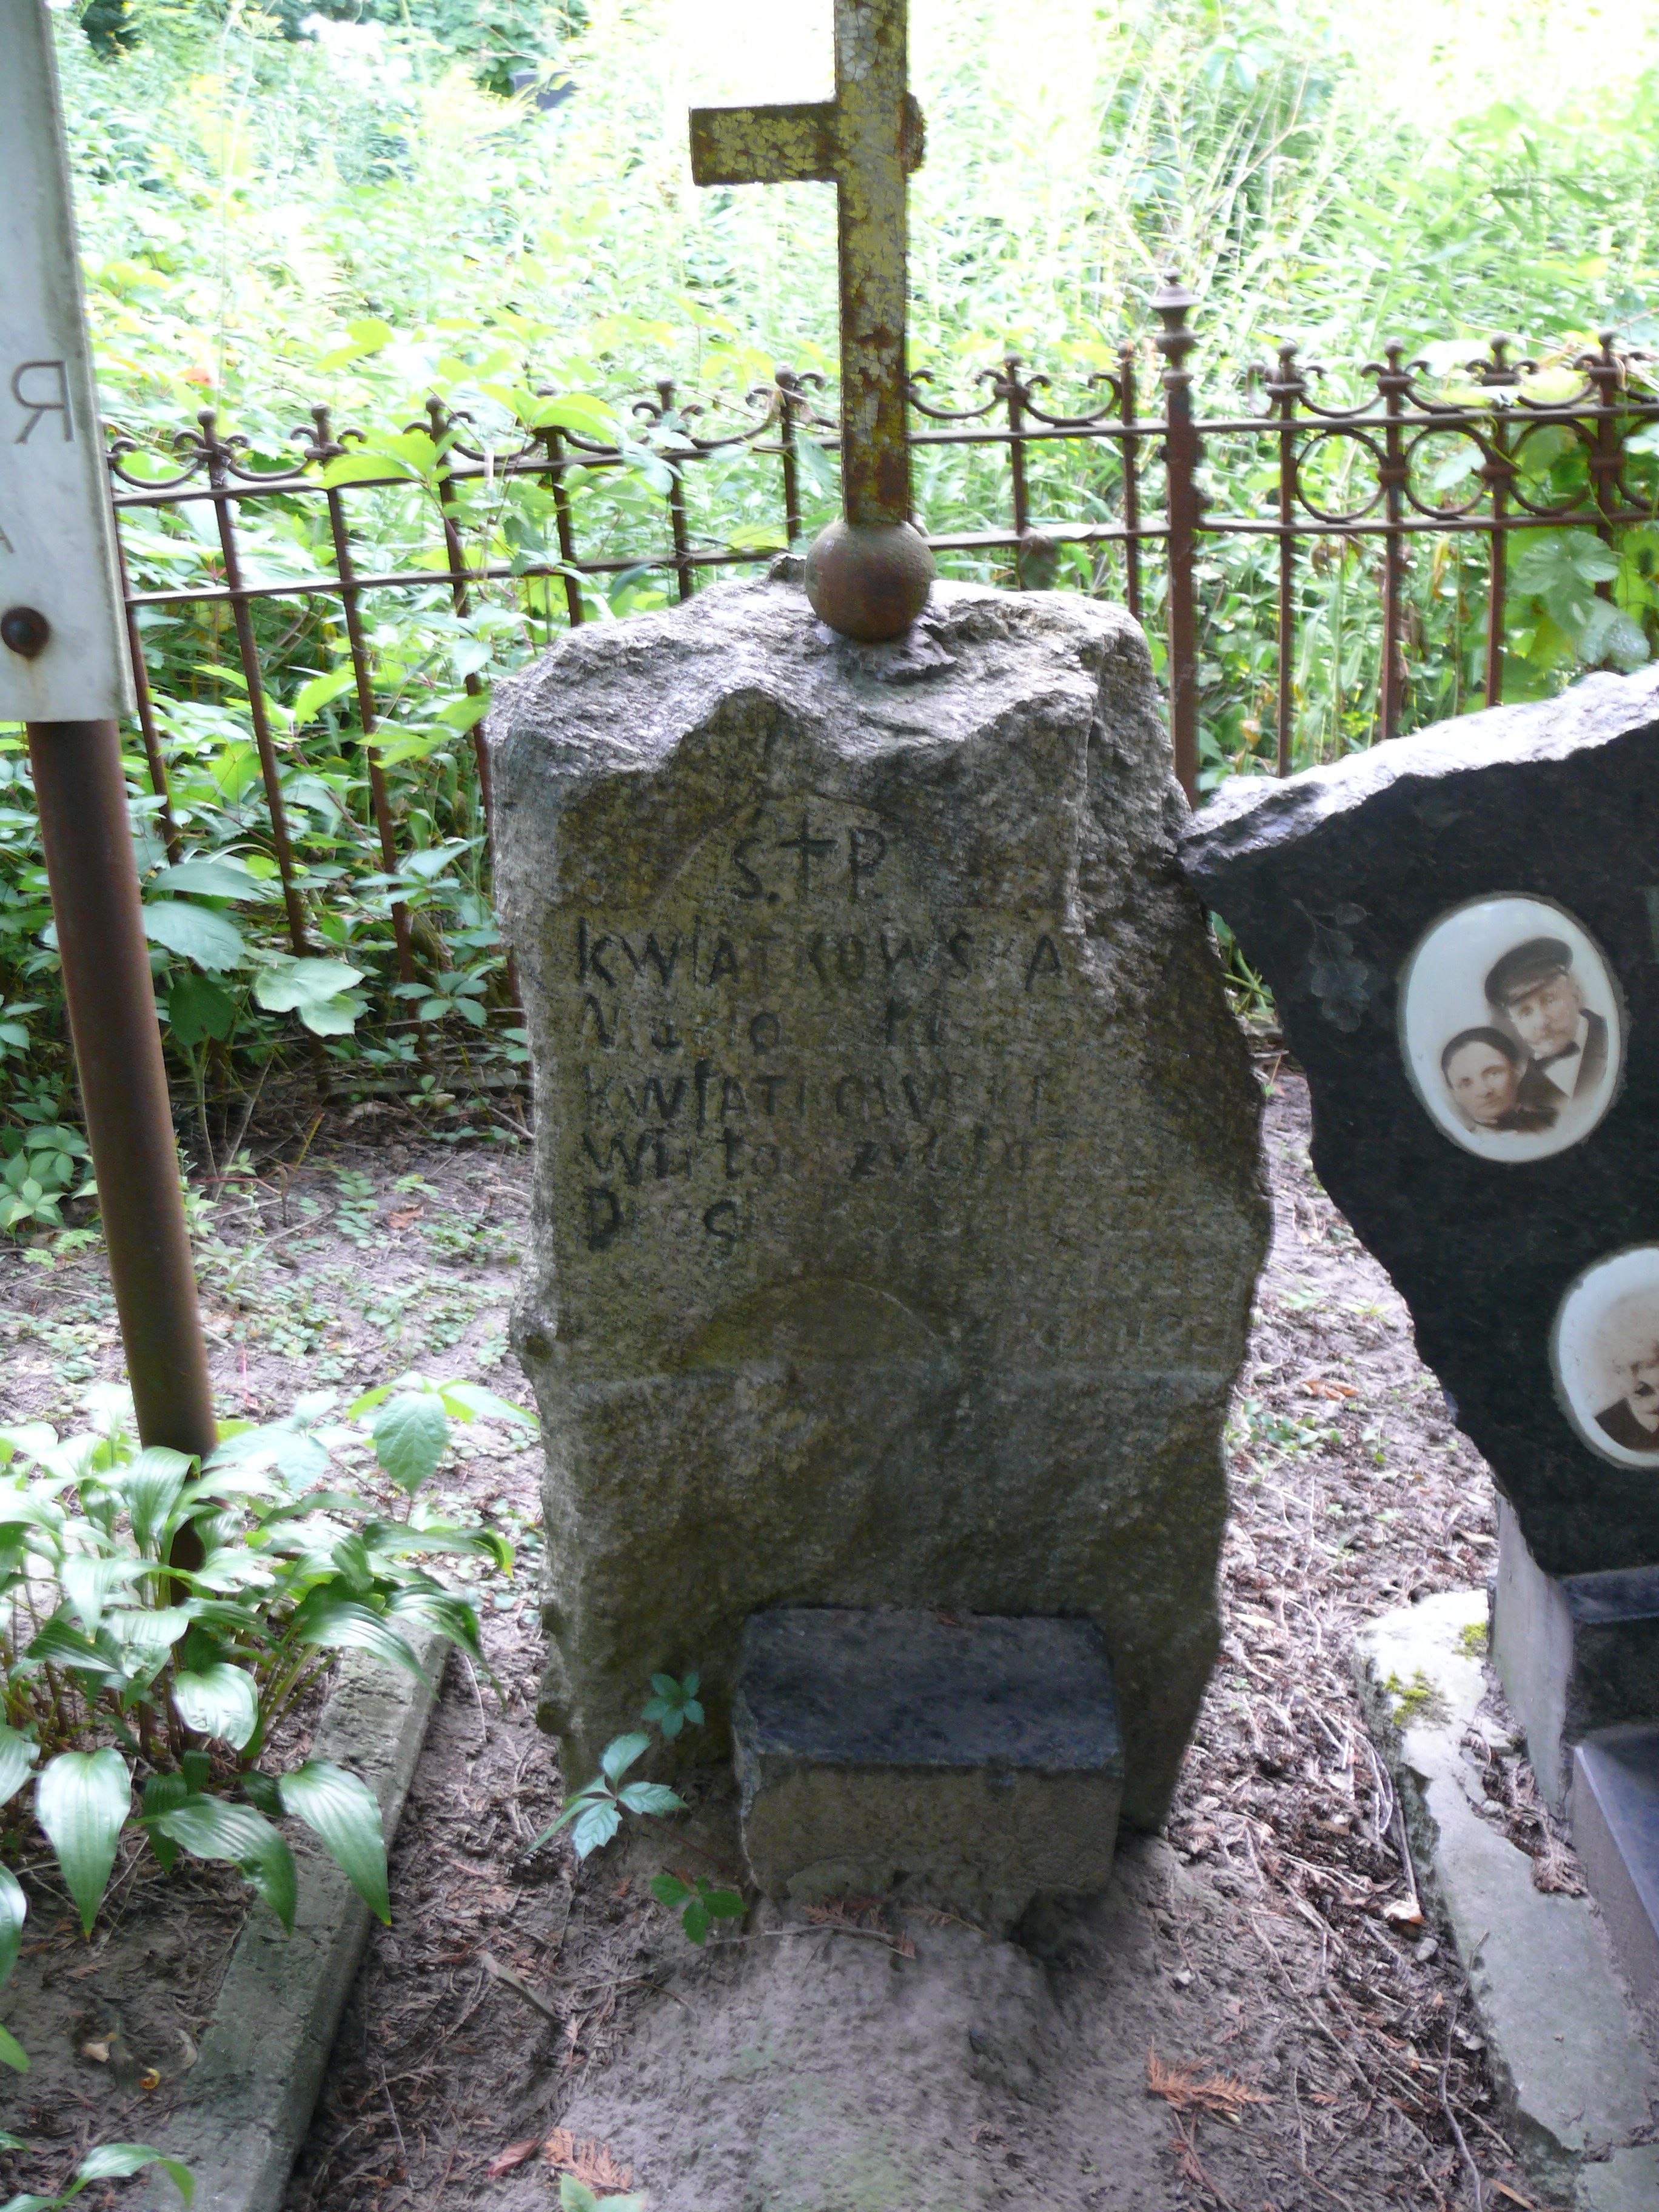 Tombstone of N. Kwiatowski; N. Kwiatowska